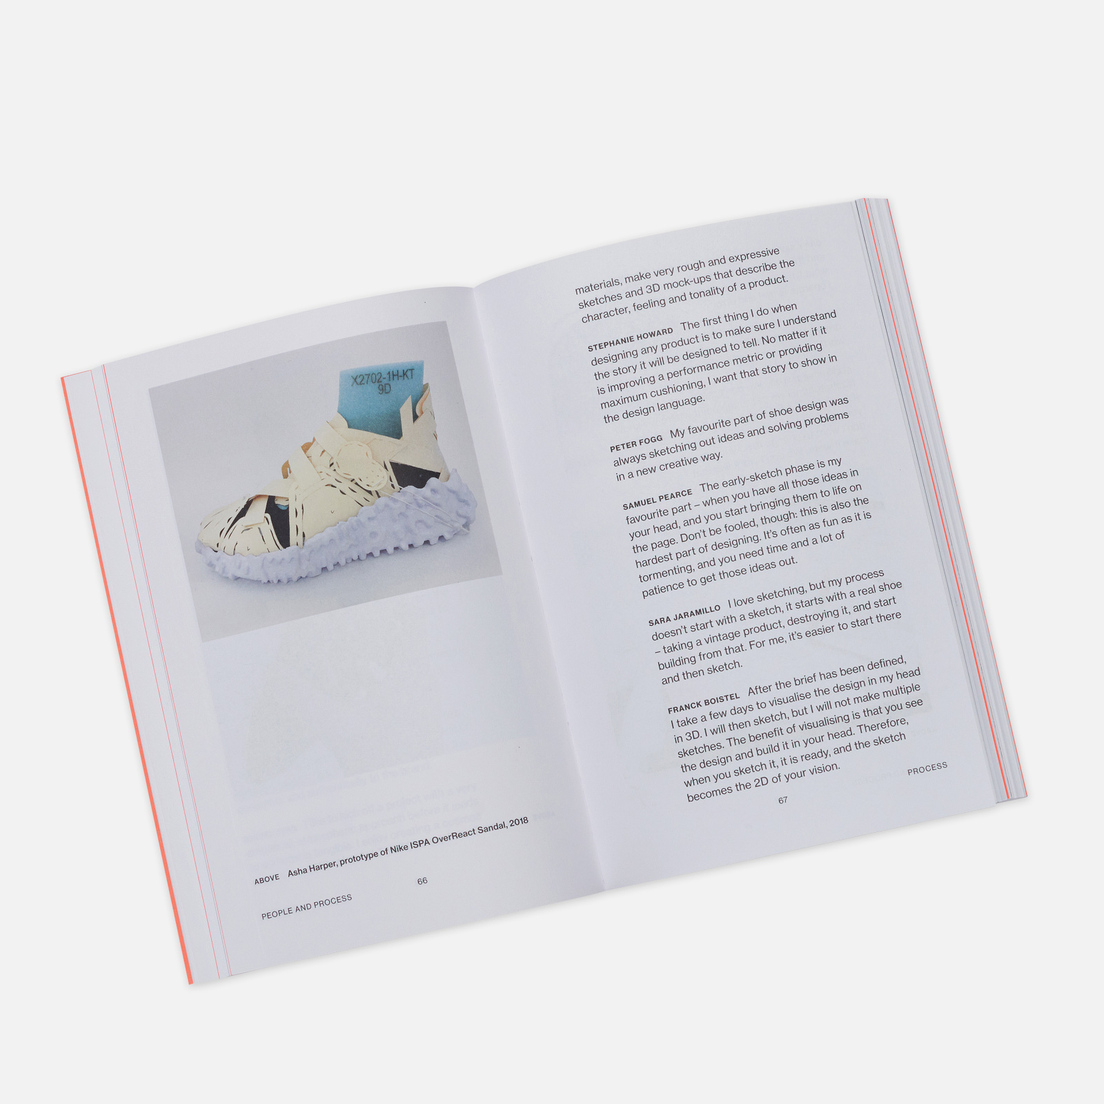 Design Museum Книга Sneakers Unboxed: Studio to Street